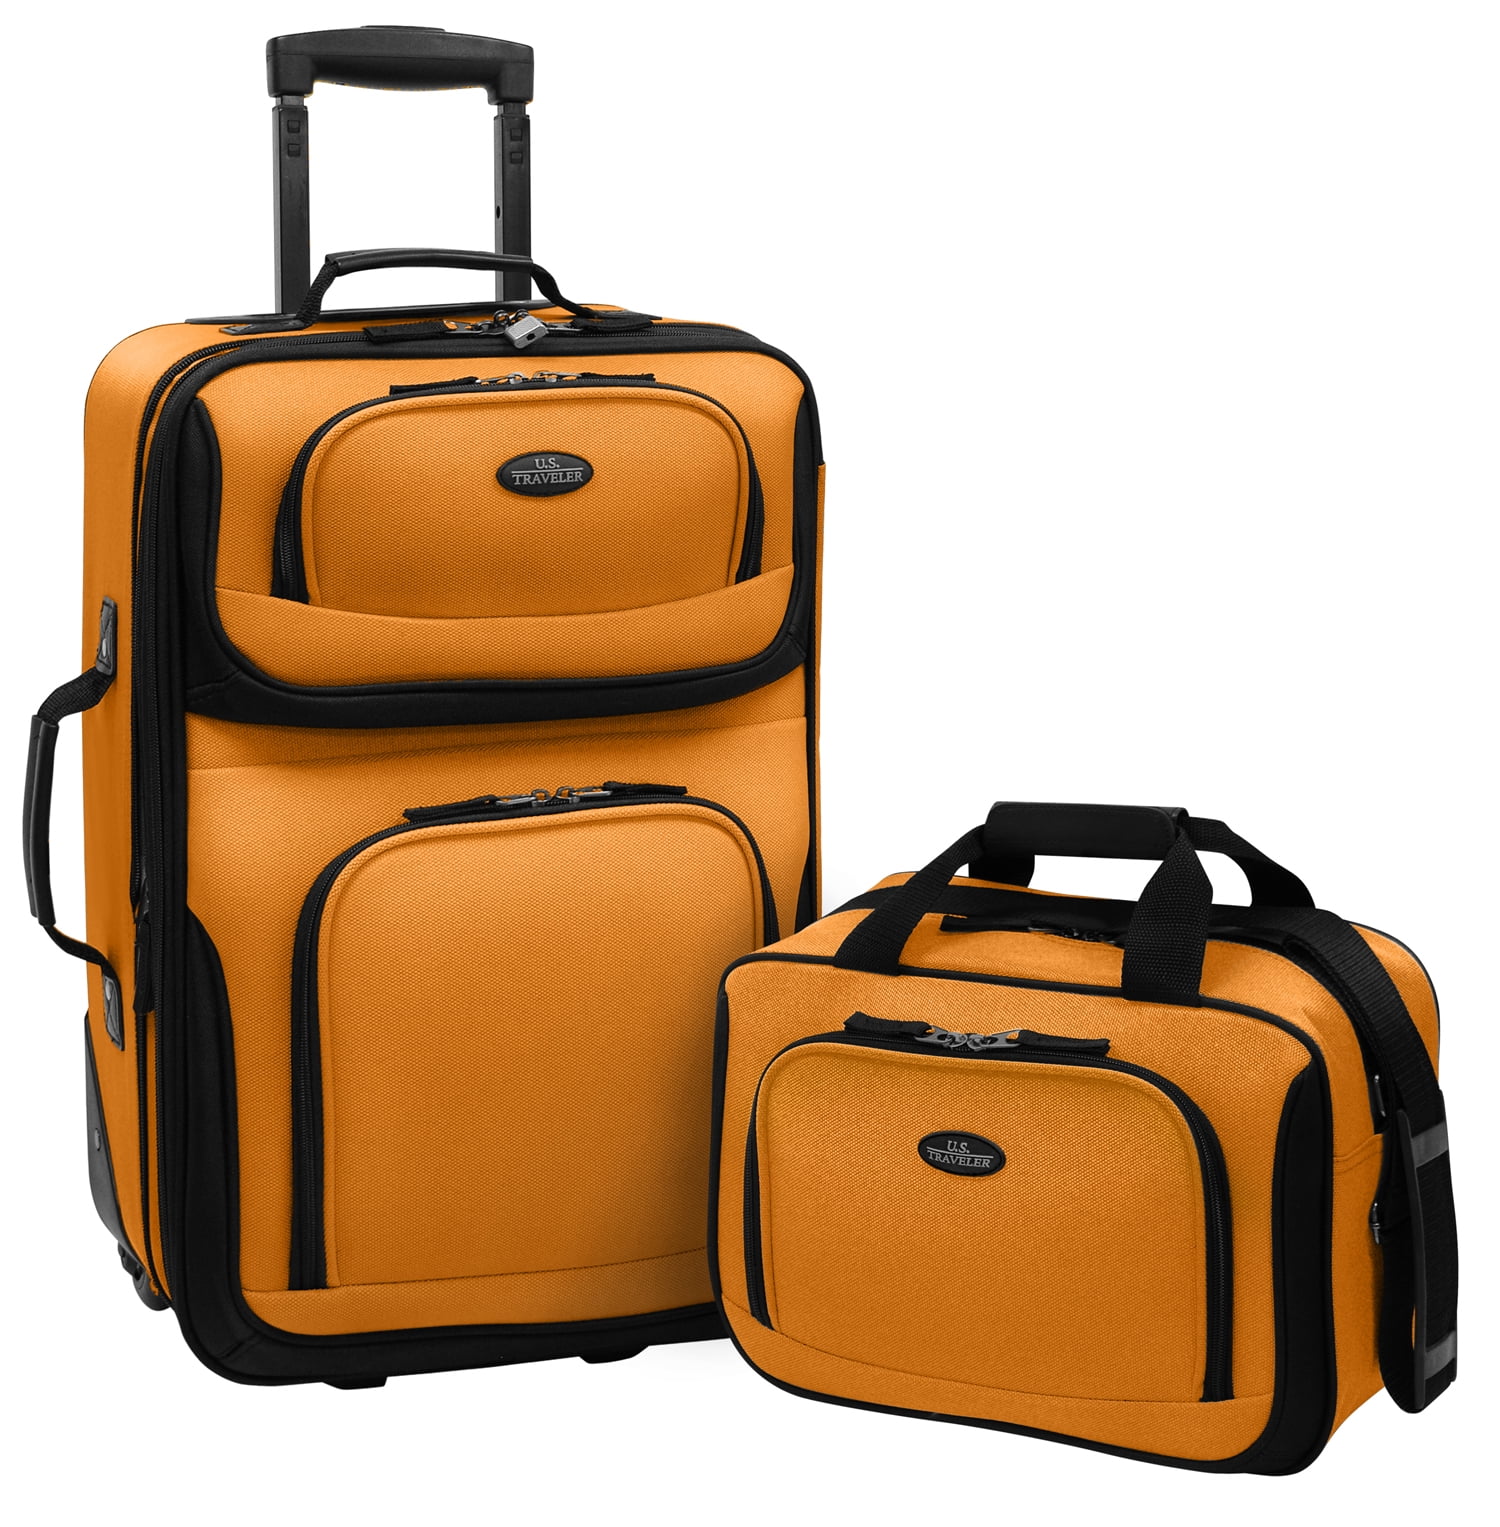 U.S. Traveler Rio 2Piece CarryOn Luggage Set